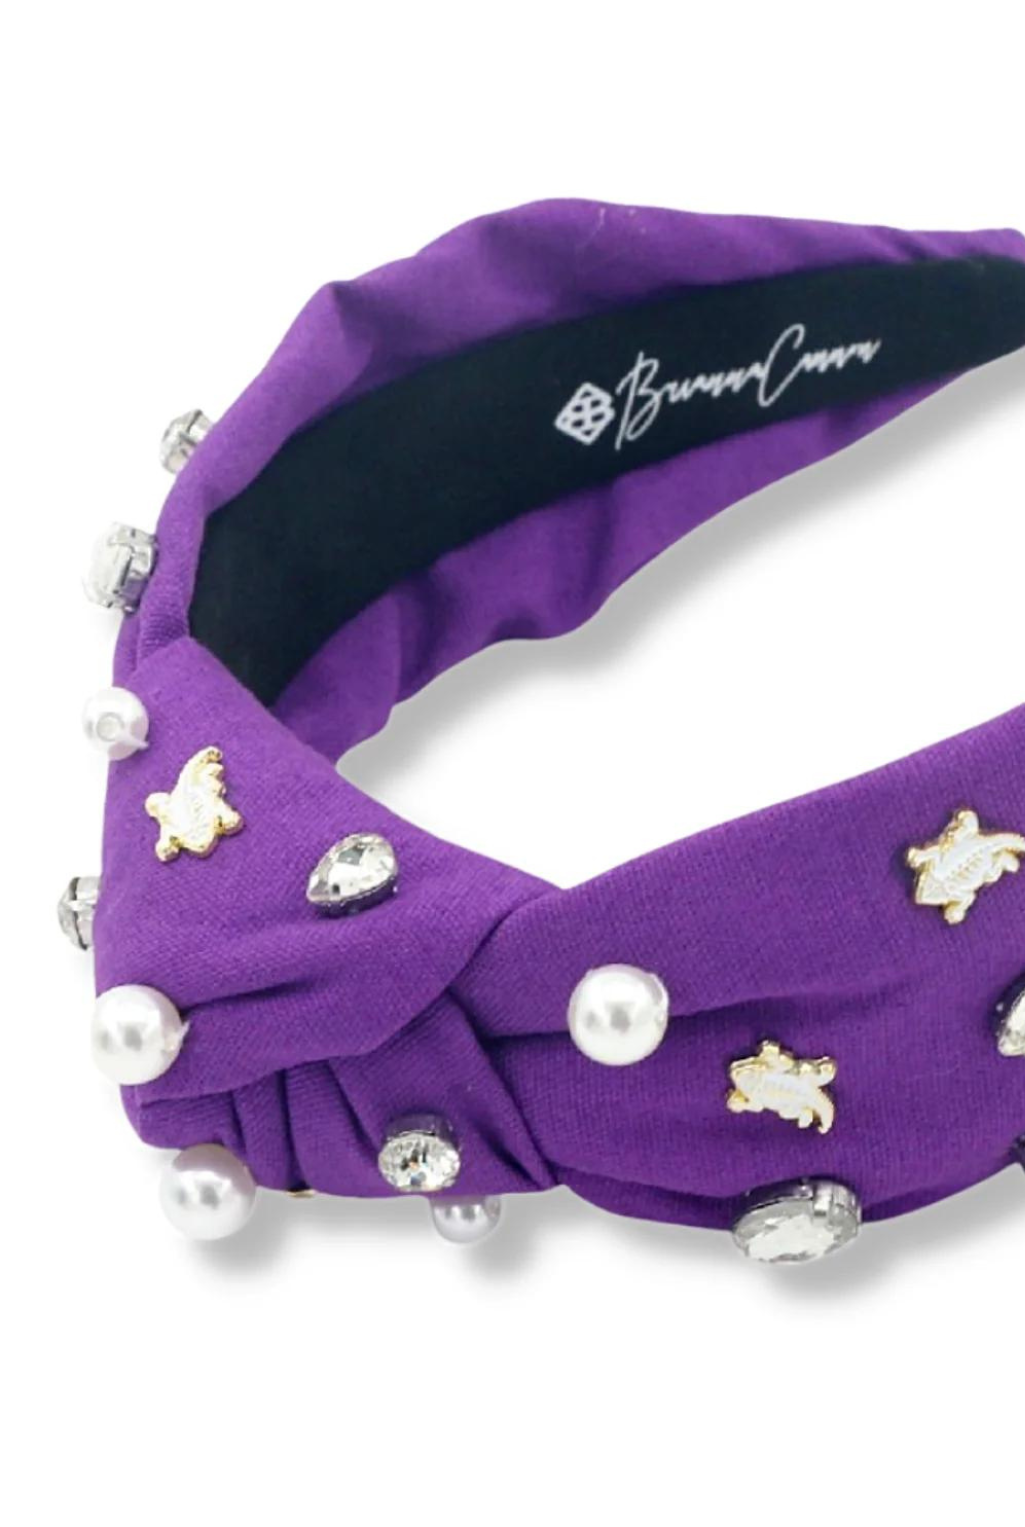 Brianna Cannon - TCU Logo Headband - Purple